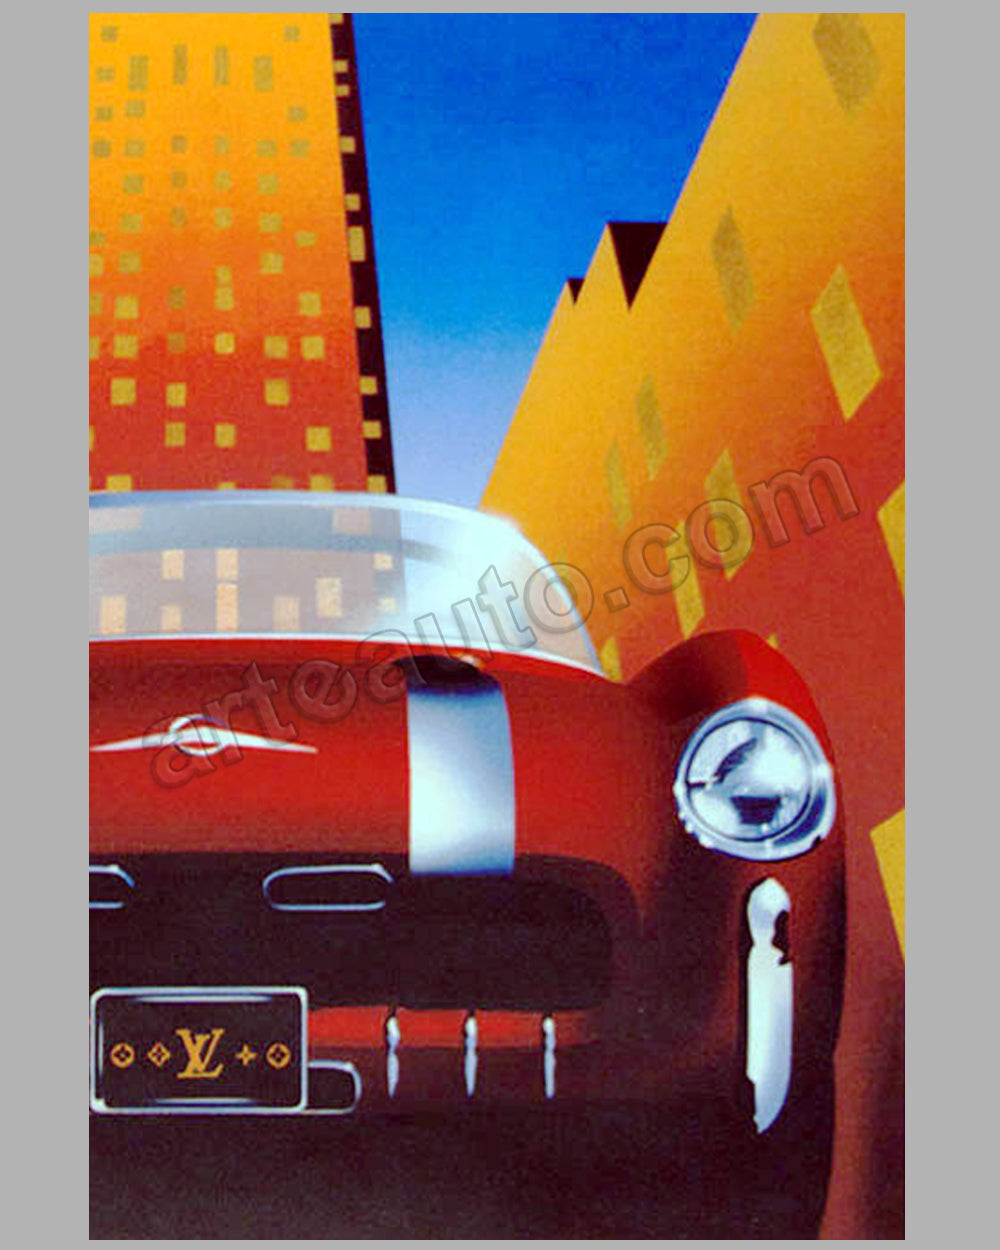 1997 Louis Vuitton Bagatelle - Razzia Original Vintage Poster For